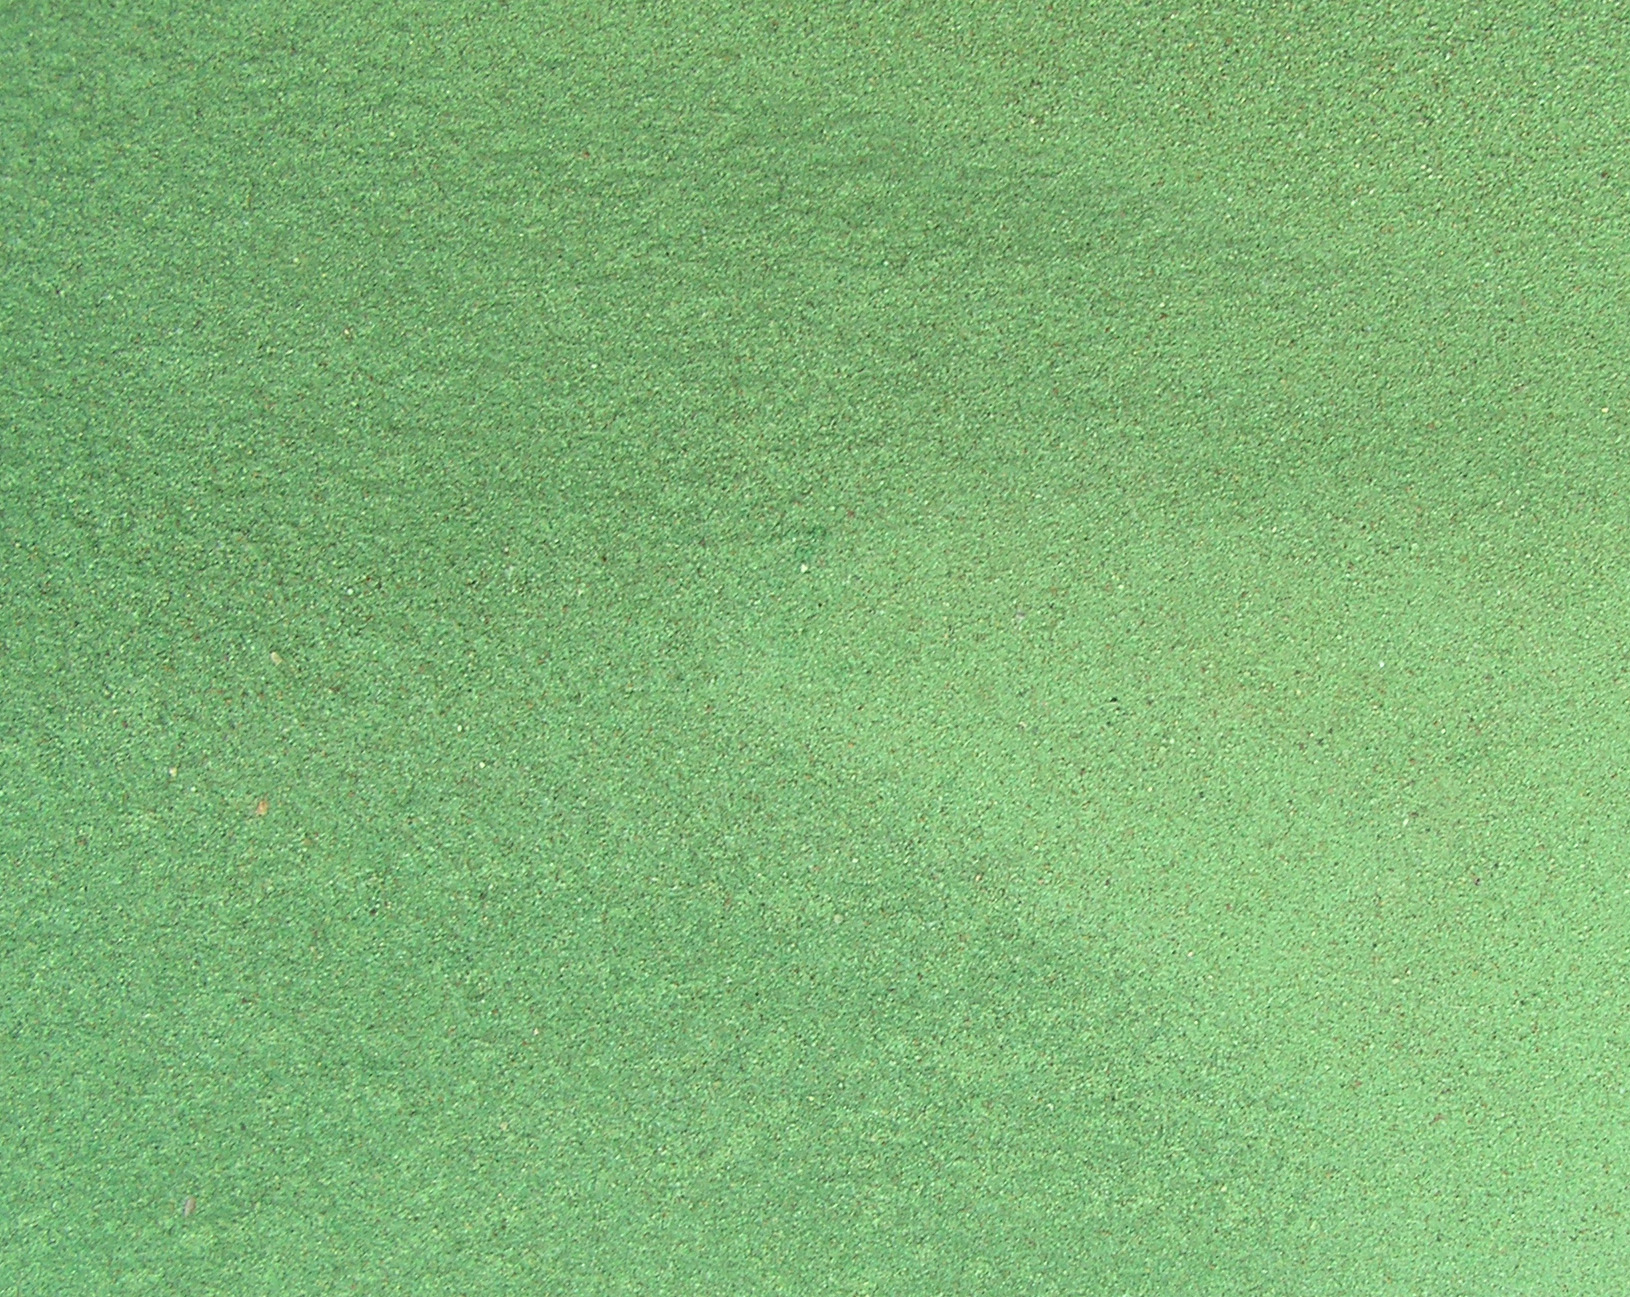 Masquerade Green Topdressing Sand